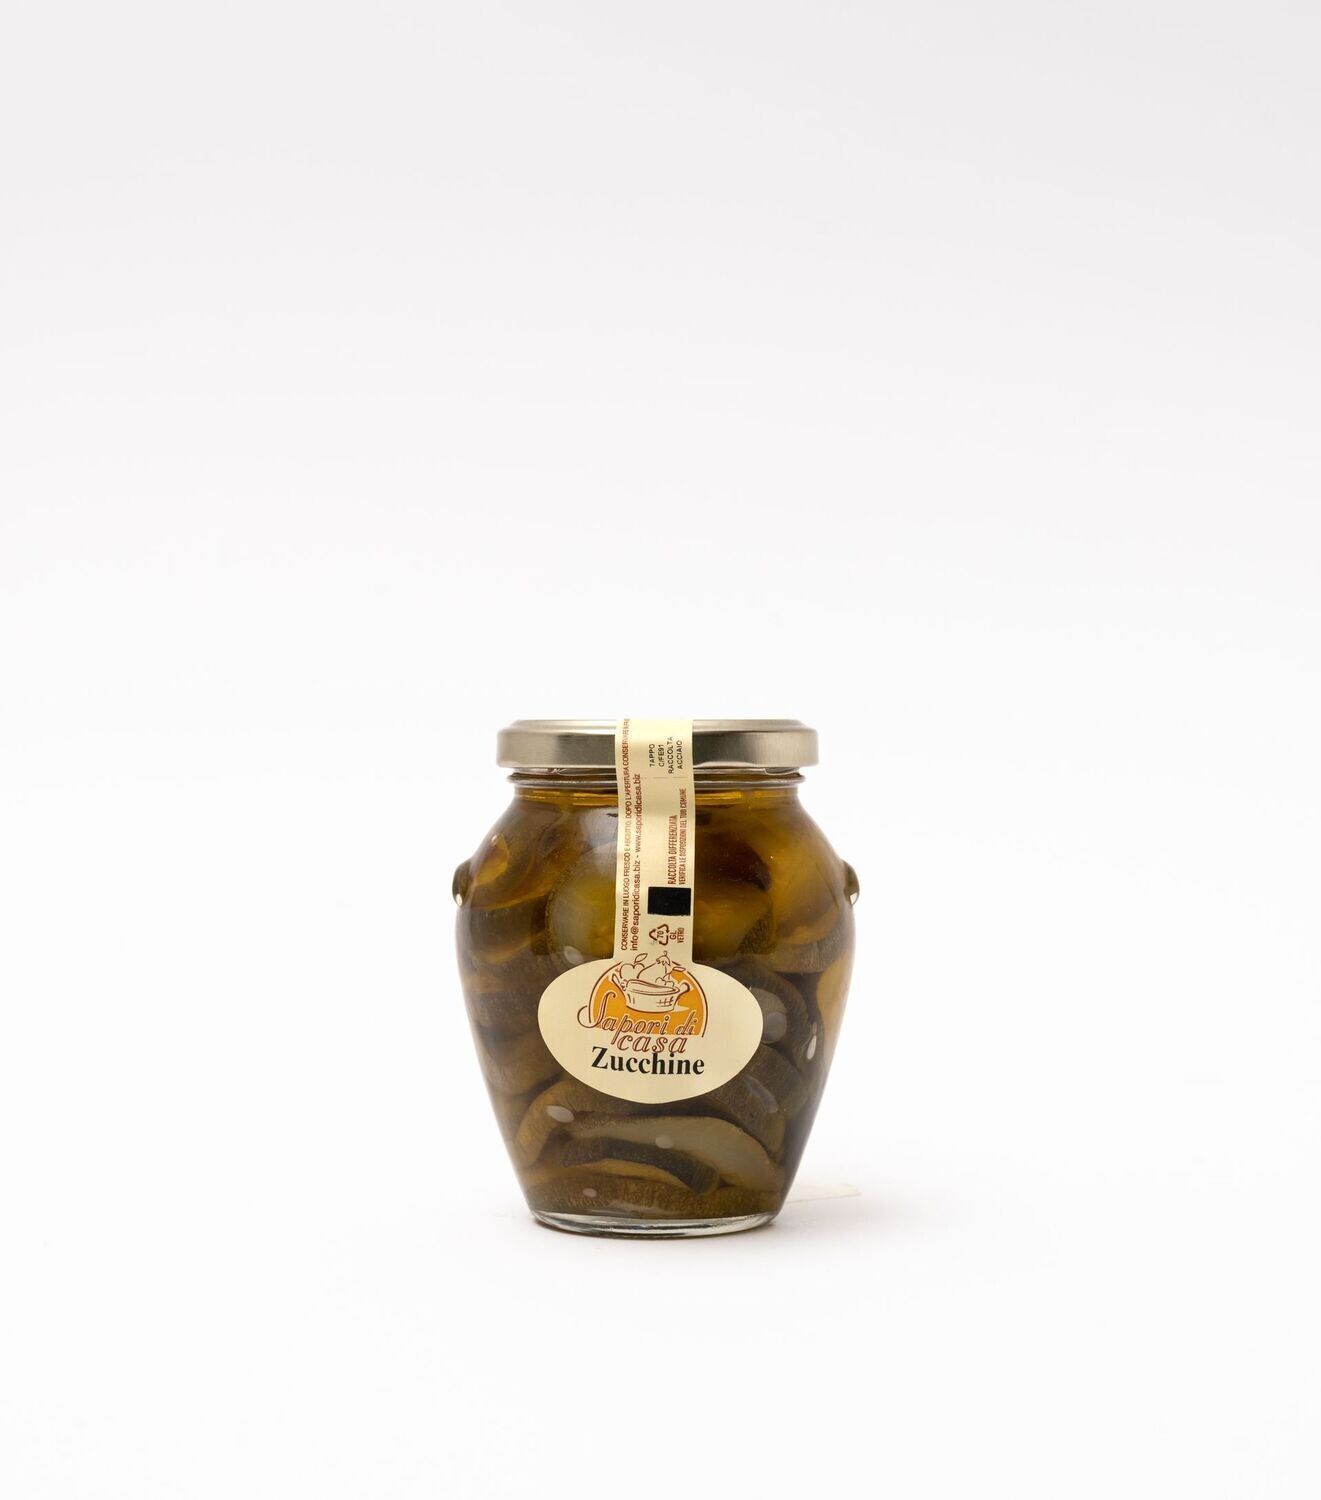 Zucchine sott'olio
Sapori di casa
(280g)